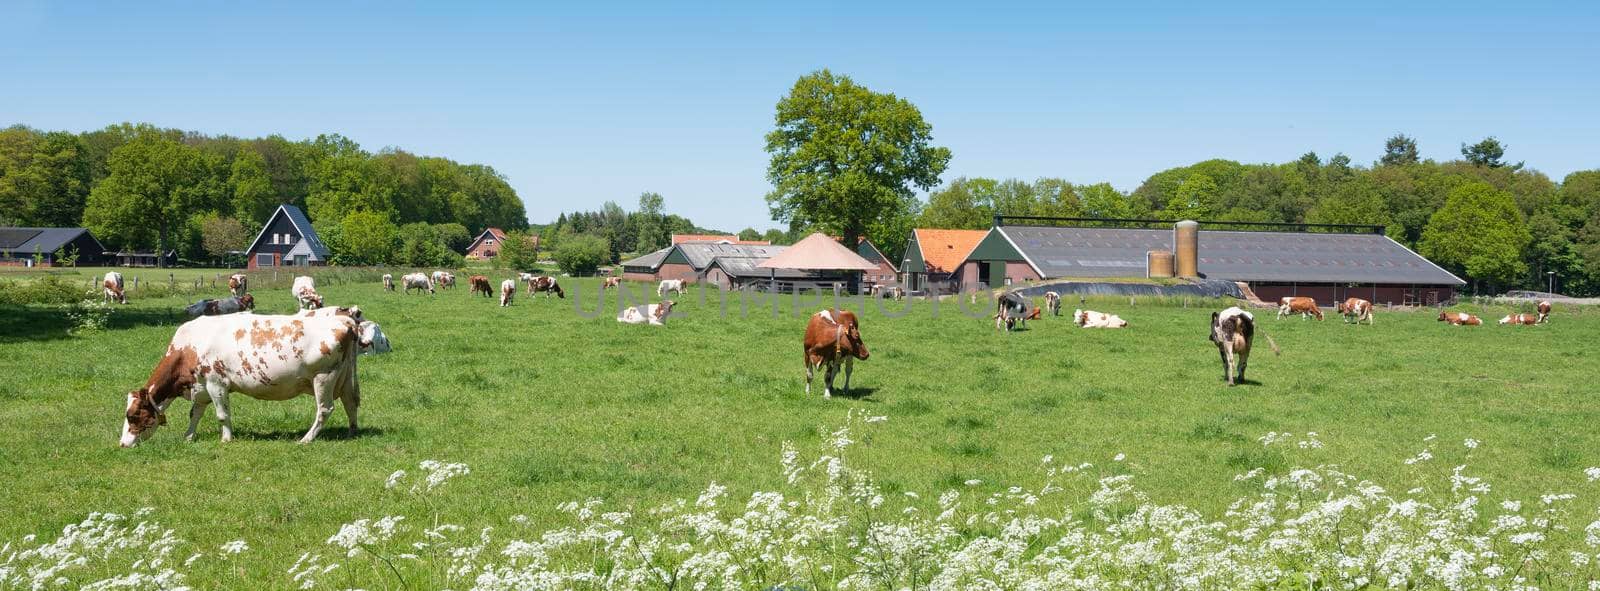 cows and flowers in meadow near oldenzaal and enschede in twente by ahavelaar